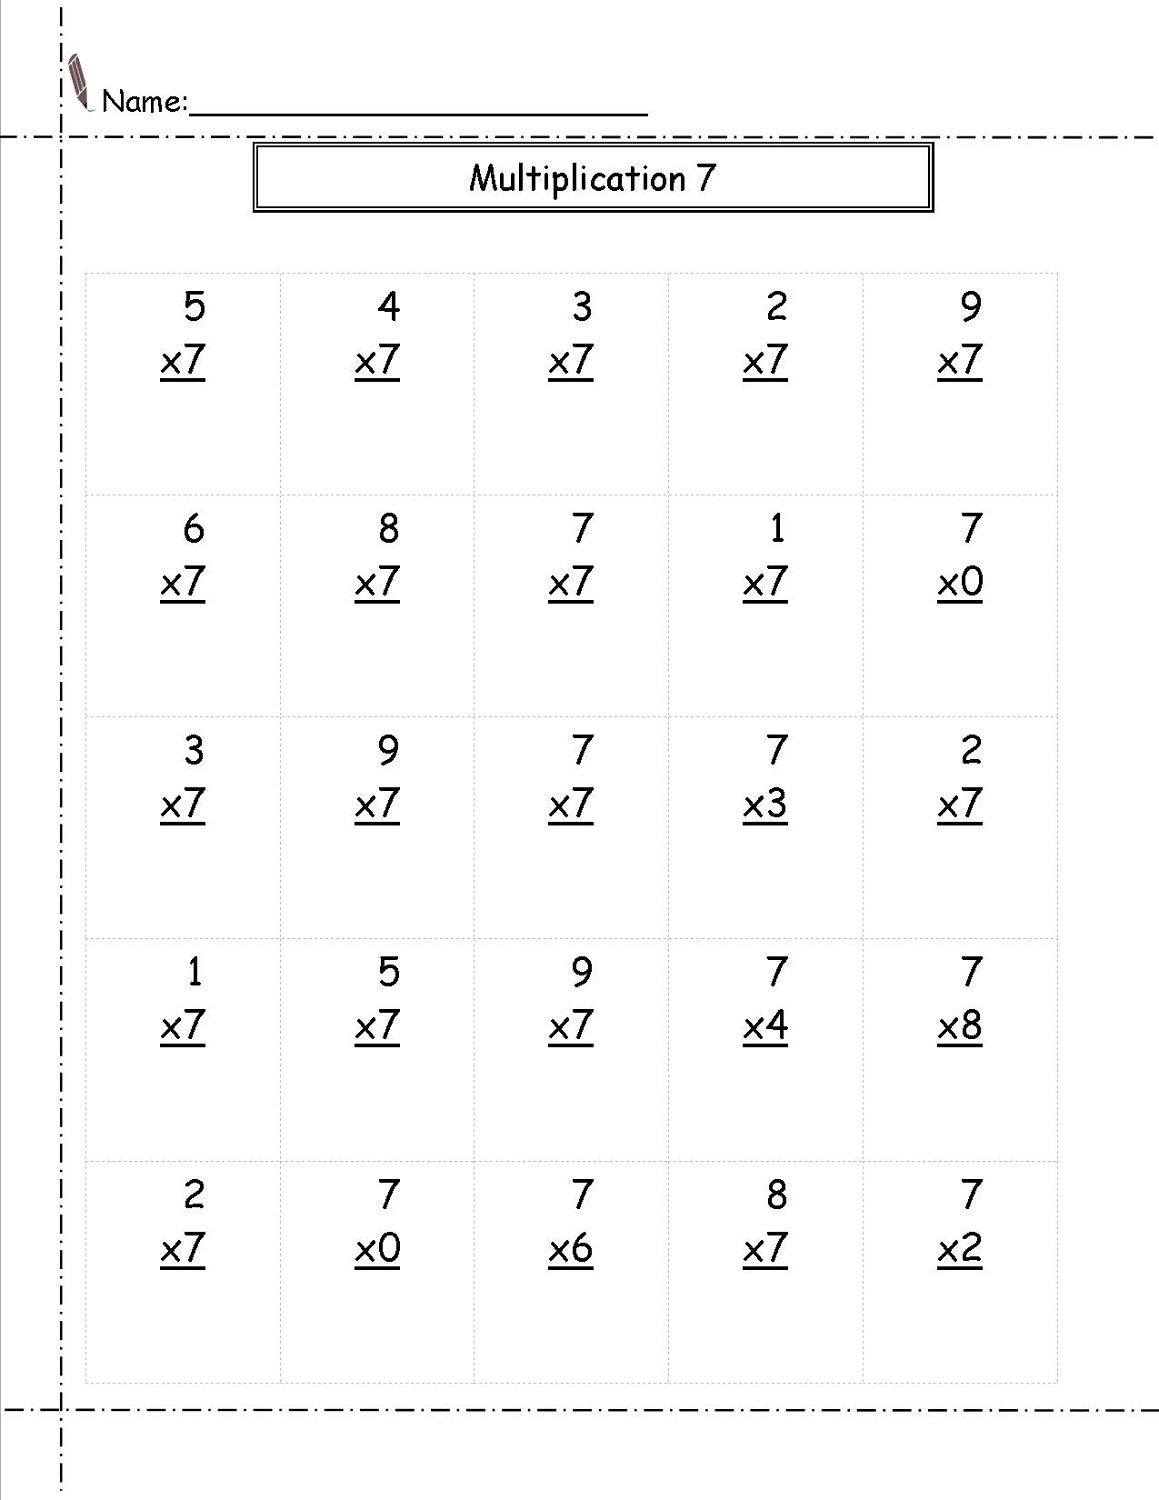 7 Times Table Worksheet Practice | Printable Math Worksheet within Multiplication 7 Printable